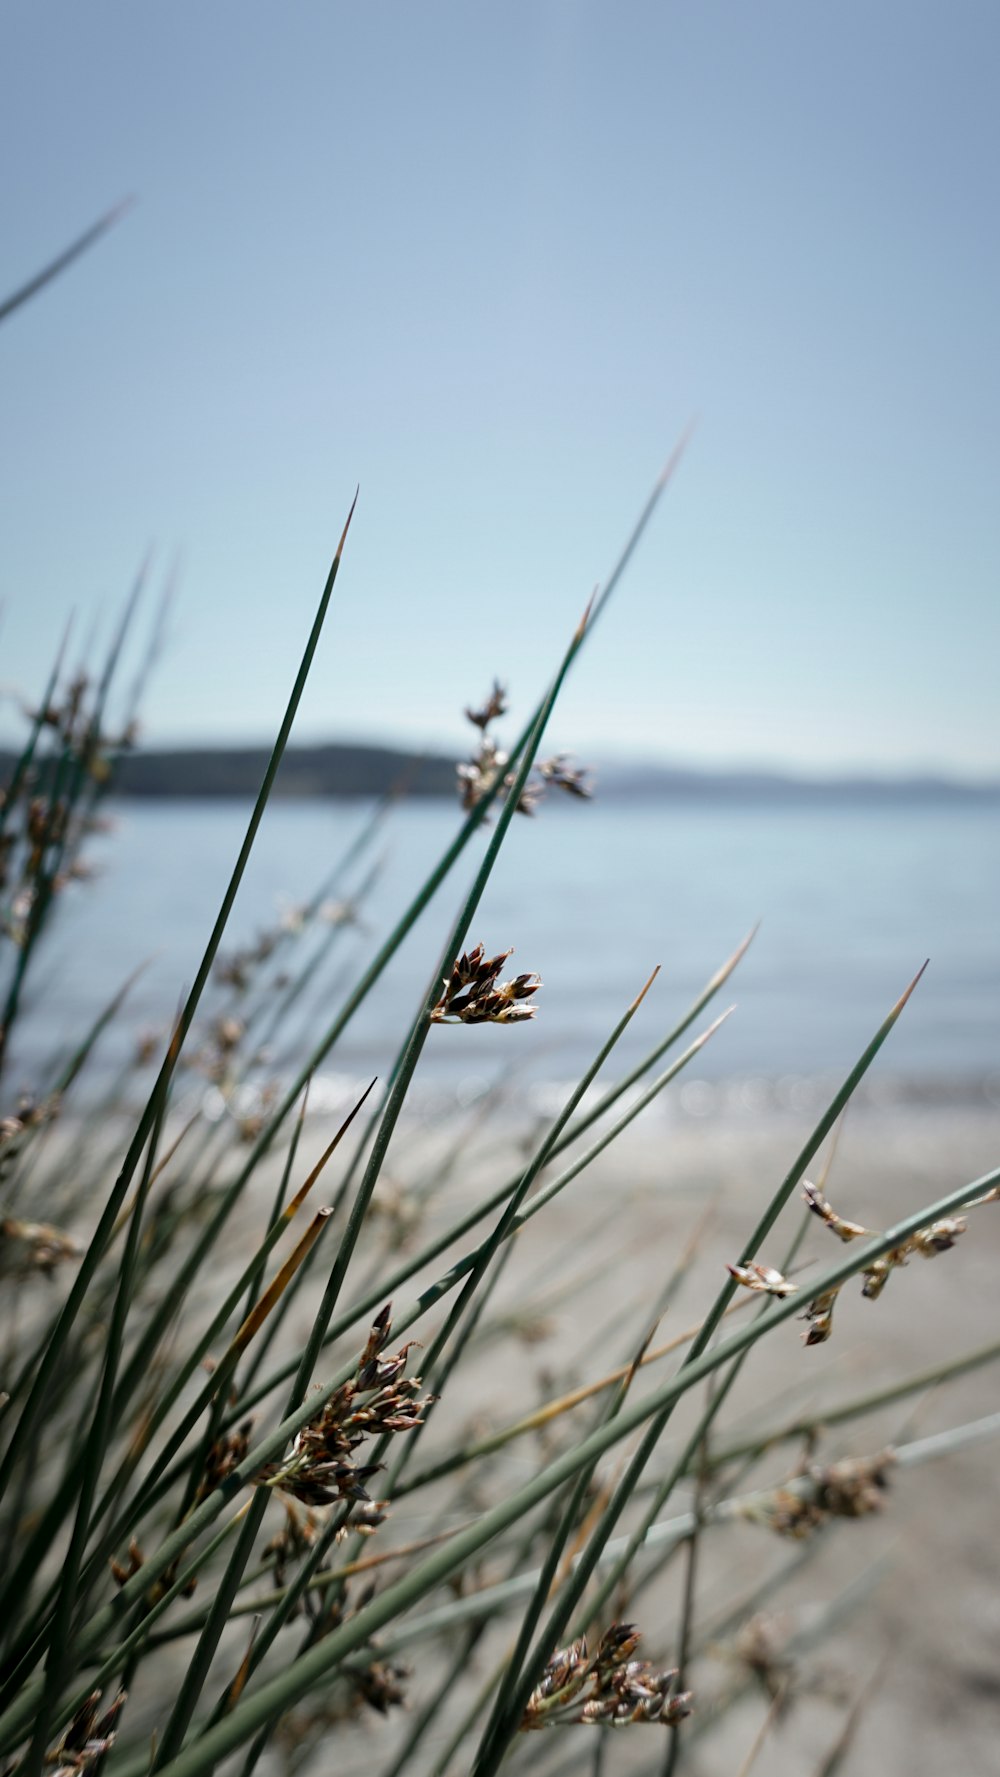 a close up of some grass on a beach